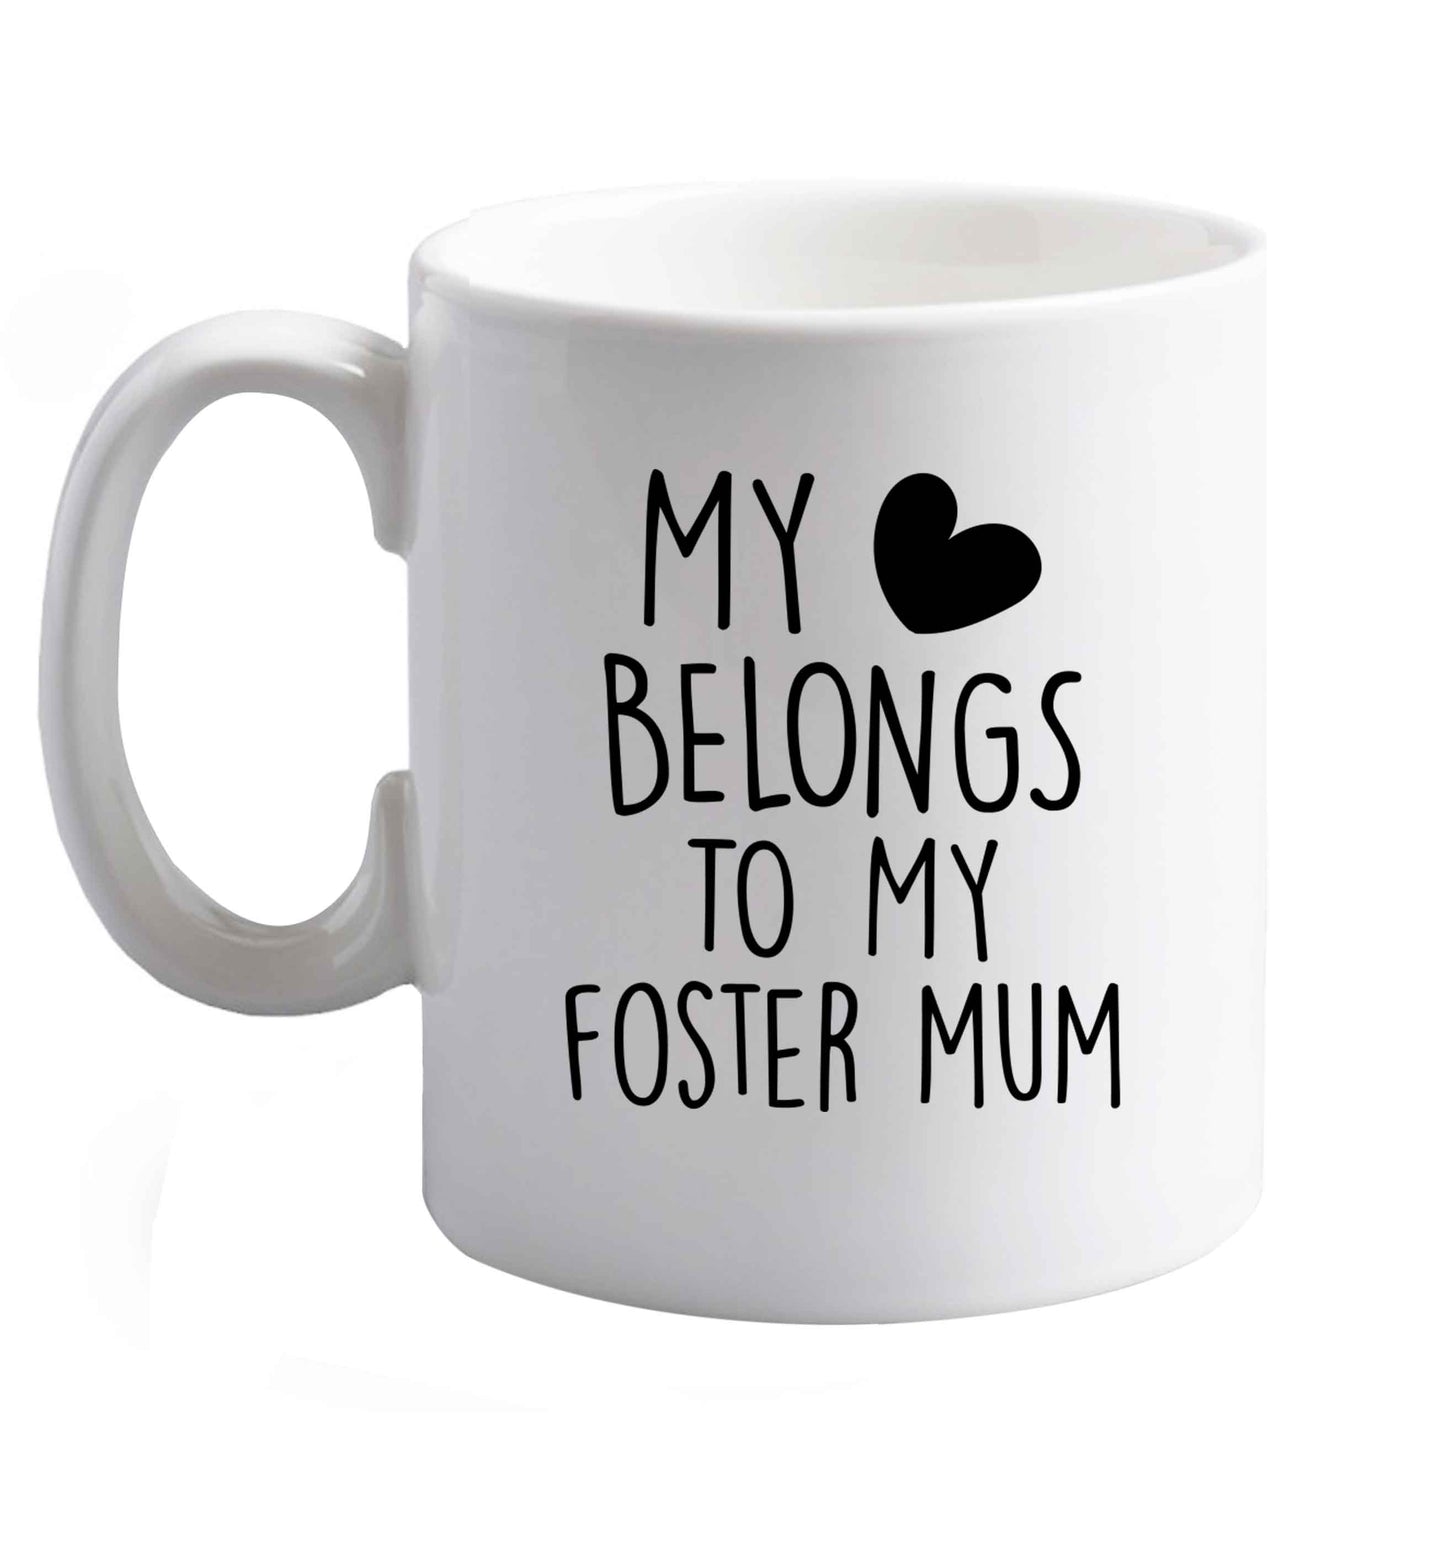 10 oz My heart belongs to my foster mum ceramic mug right handed